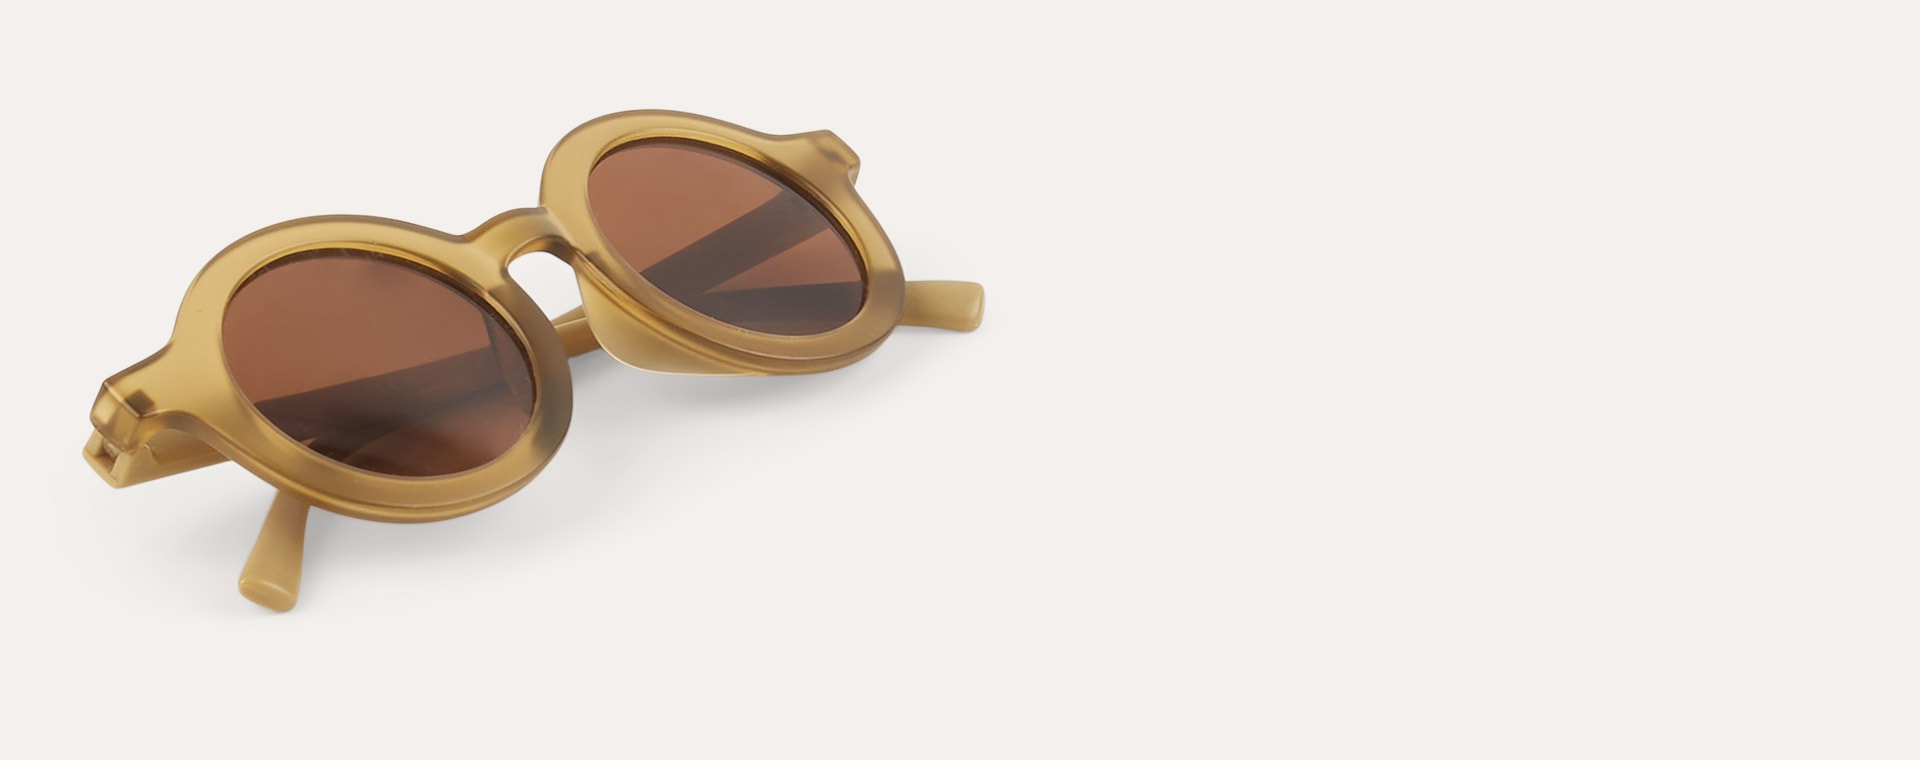 Honey KIDLY Label Round Sustainable Sunglasses